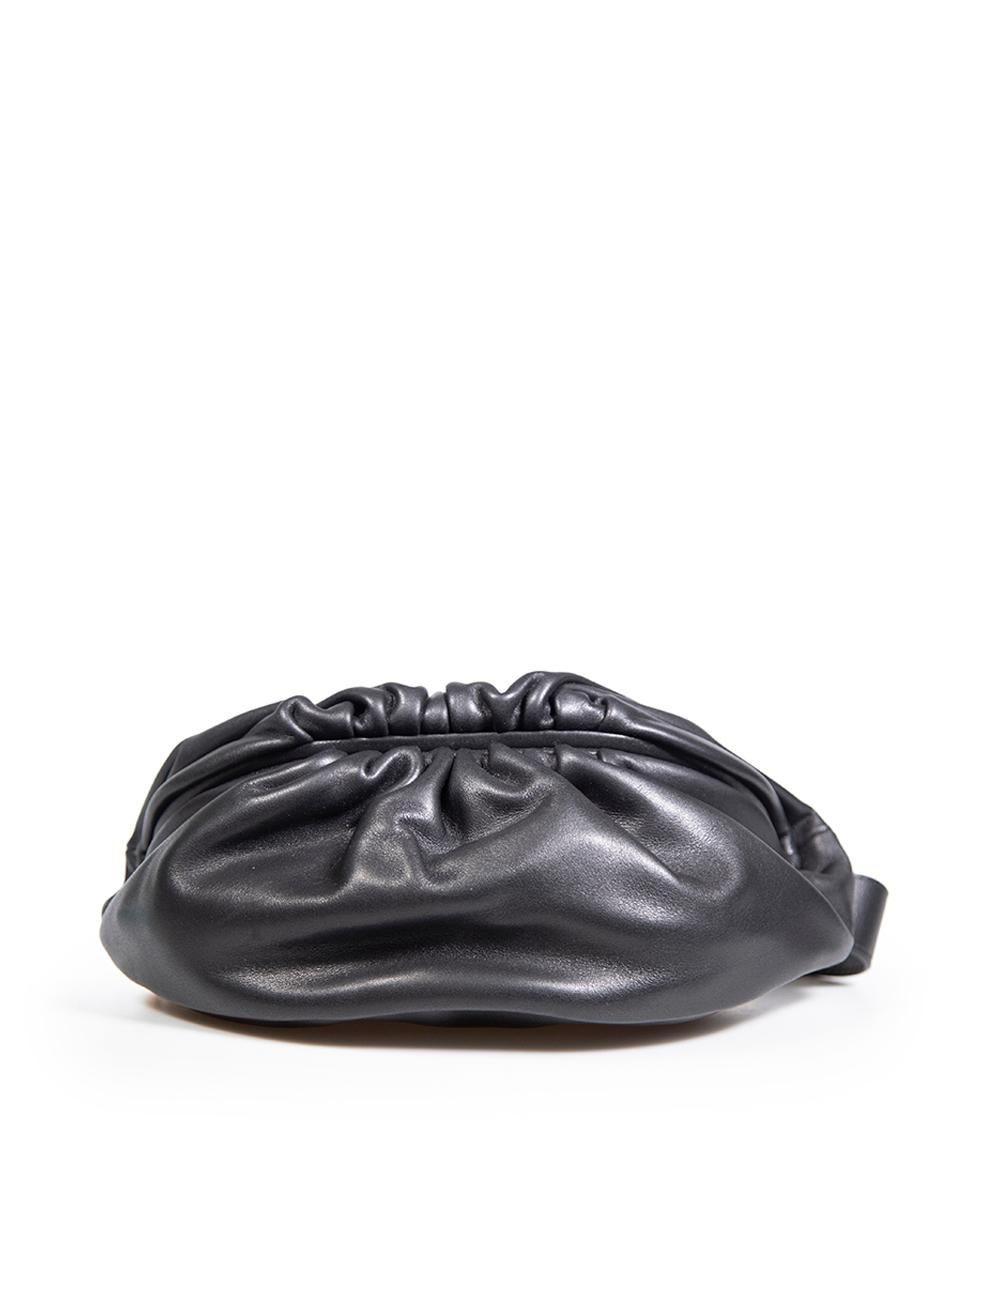 Bottega Veneta Black Leather Crossbody Chain Pouch Bag 1